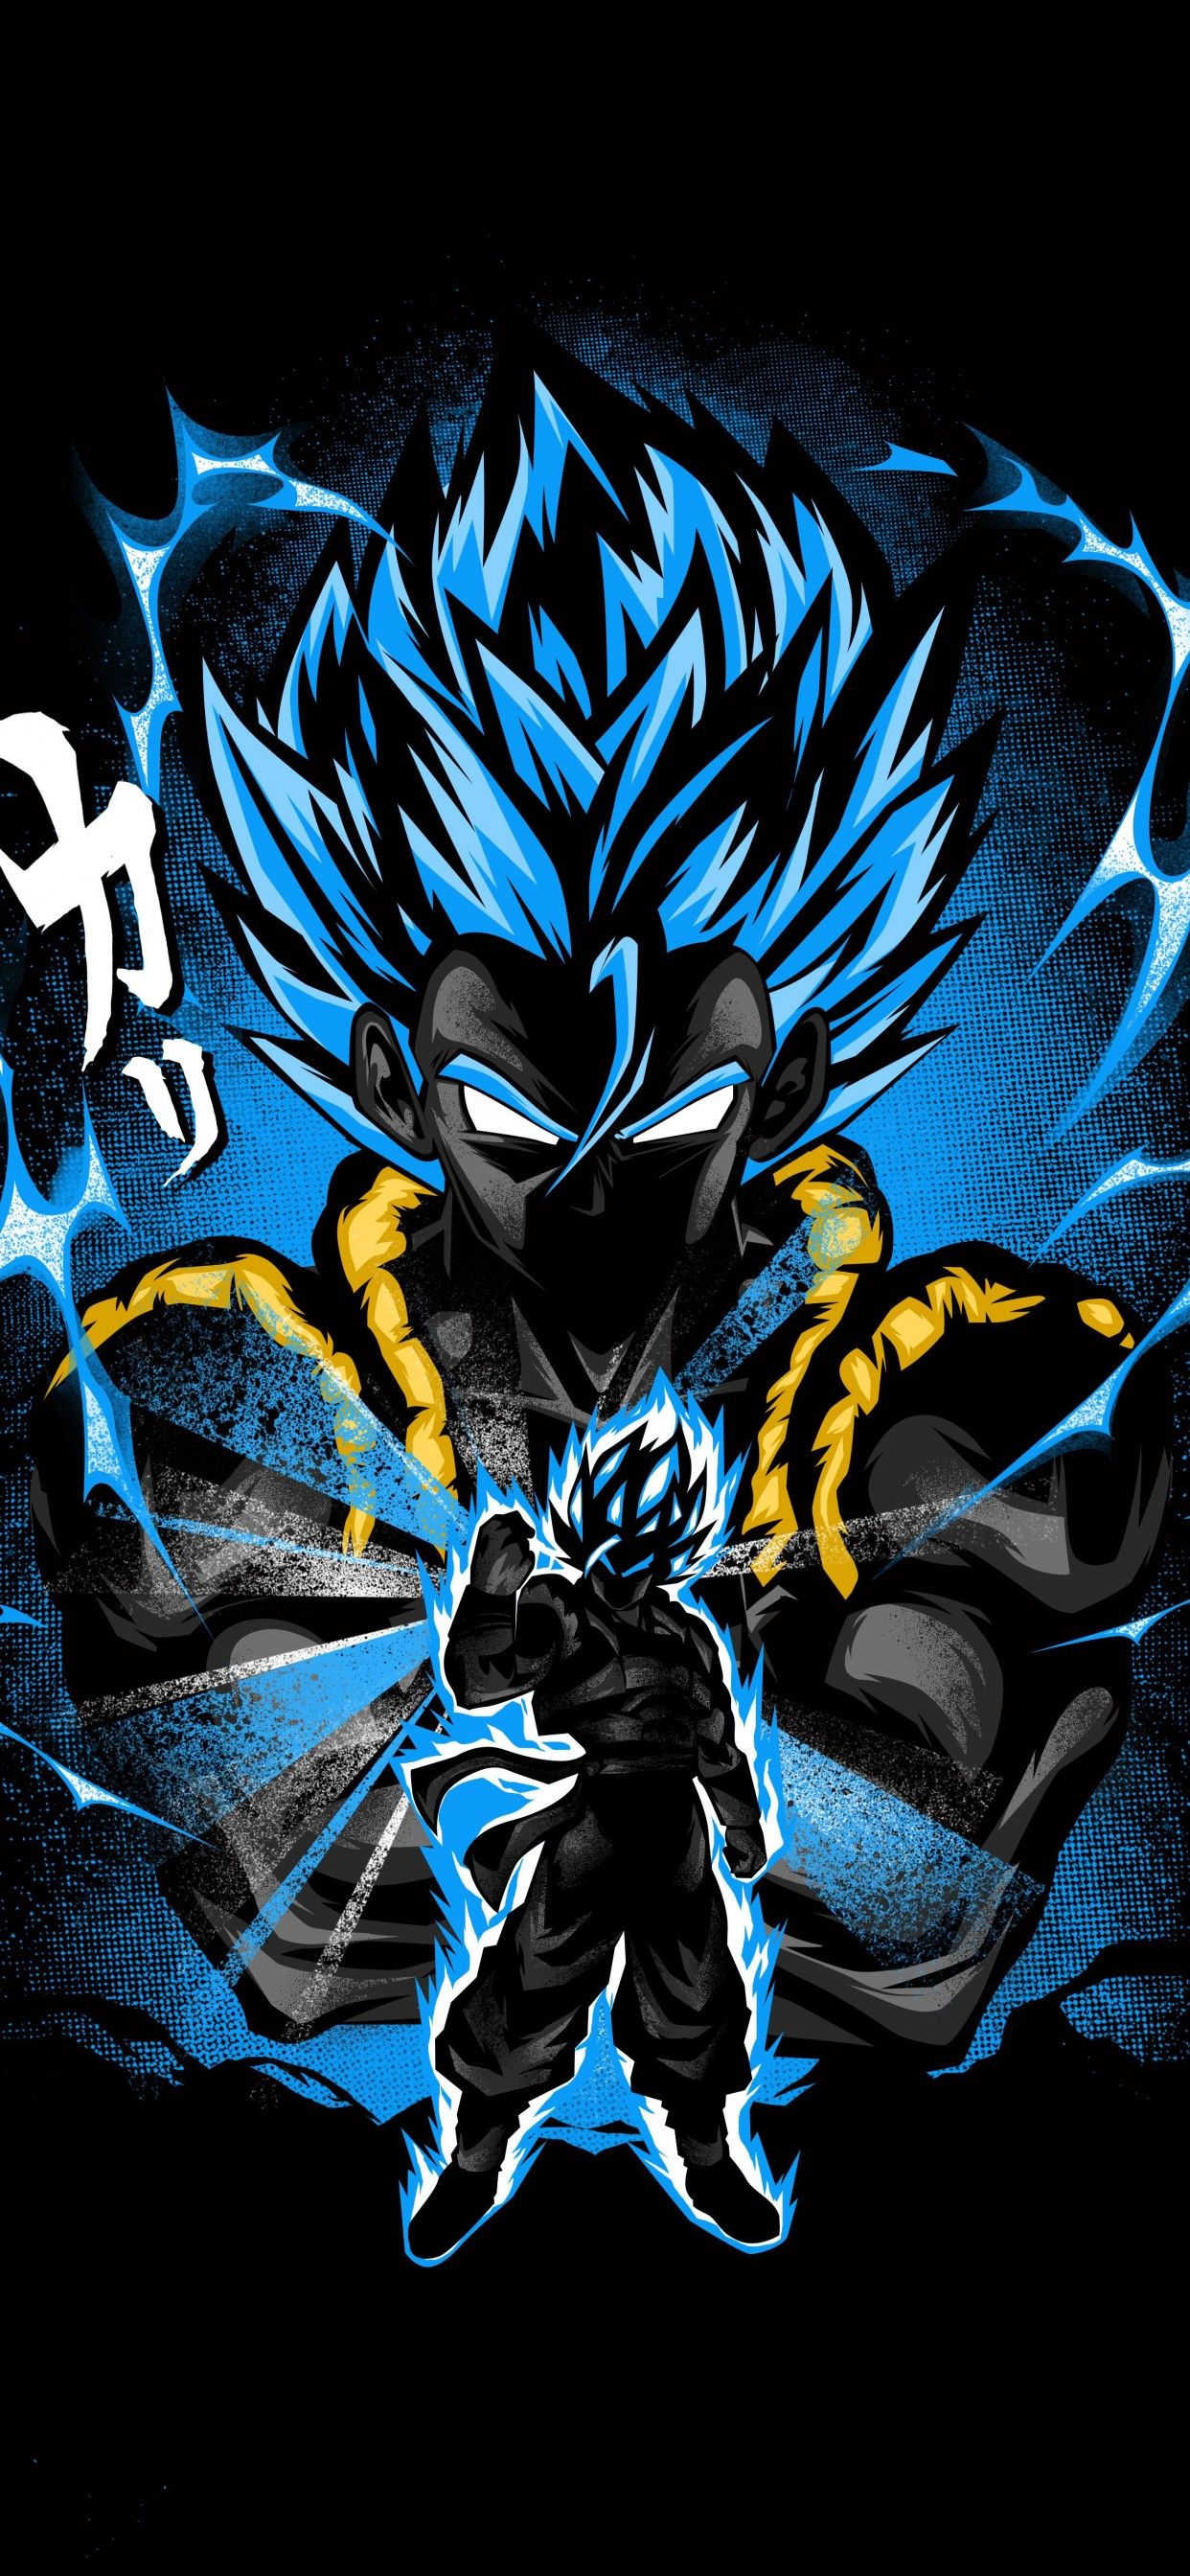 Goku 4K Wallpaper, Fusion attack, Dragon Ball Z, Anime series, Black background, AMOLED, 5K, Graphics CGI